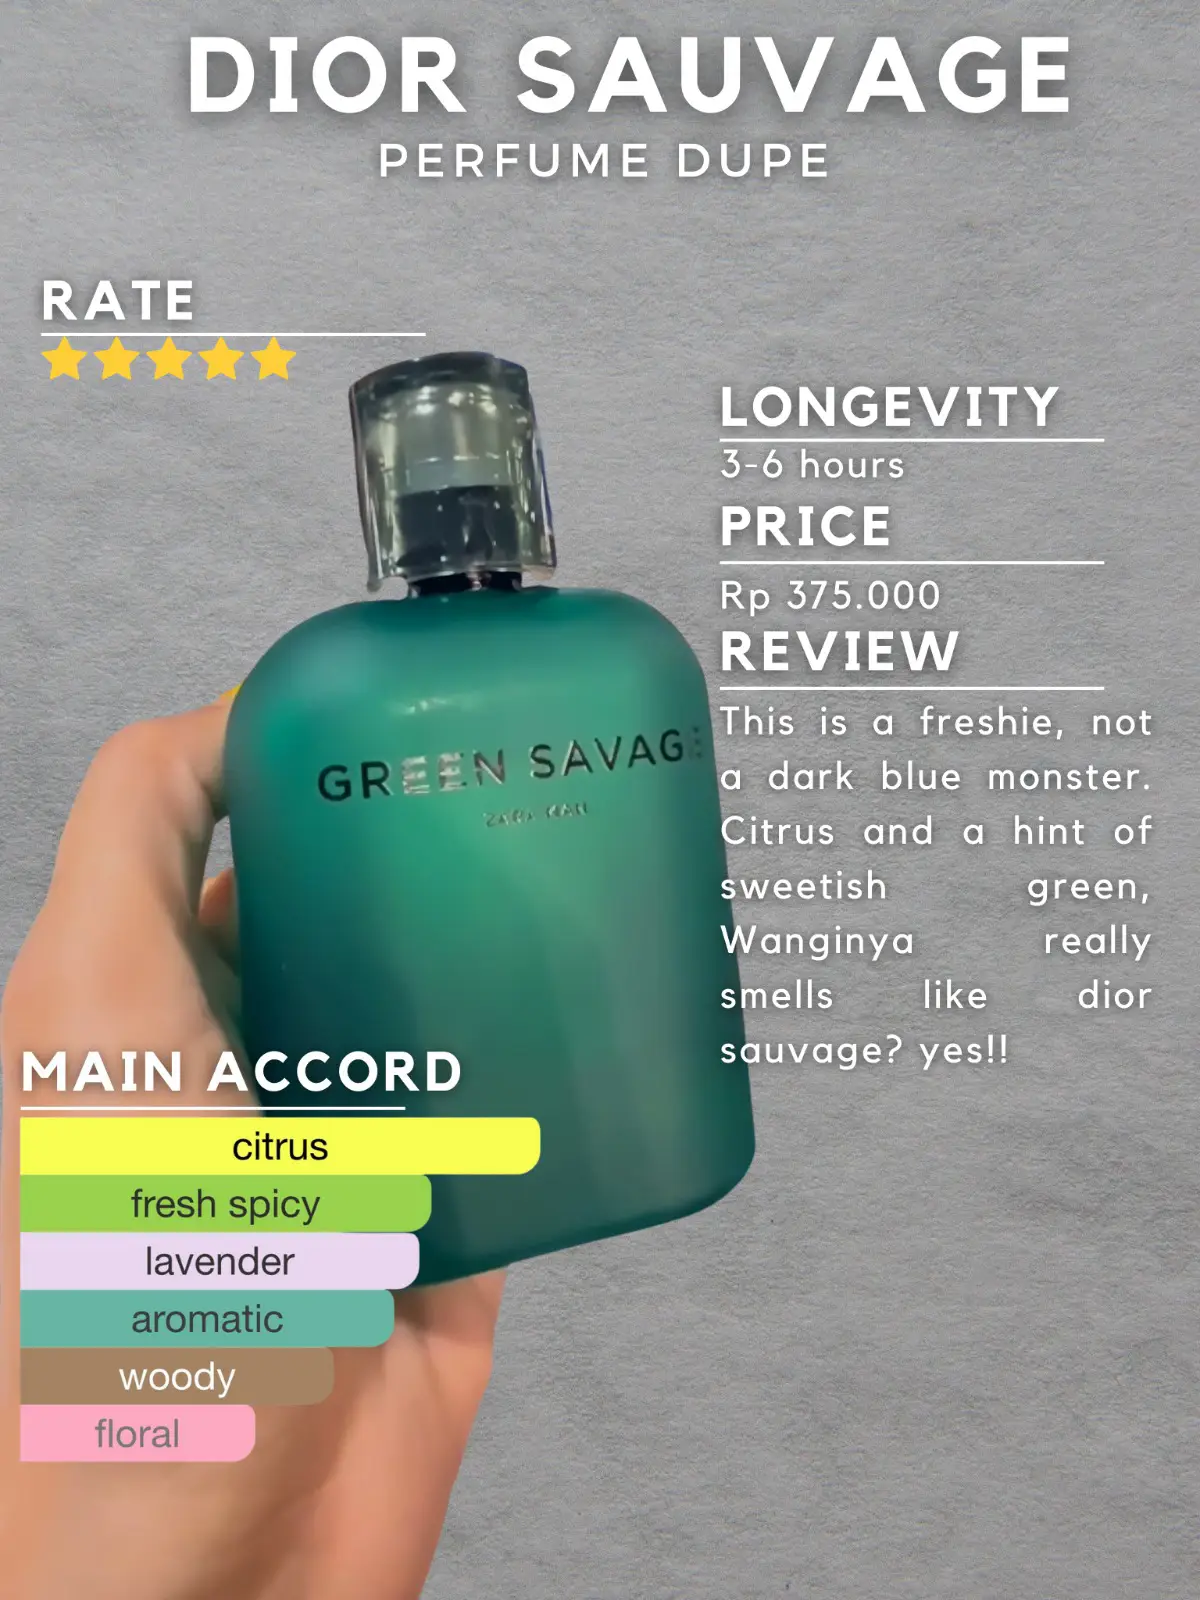 Green Savage a Budget Perfume by ZARA, Detail Review